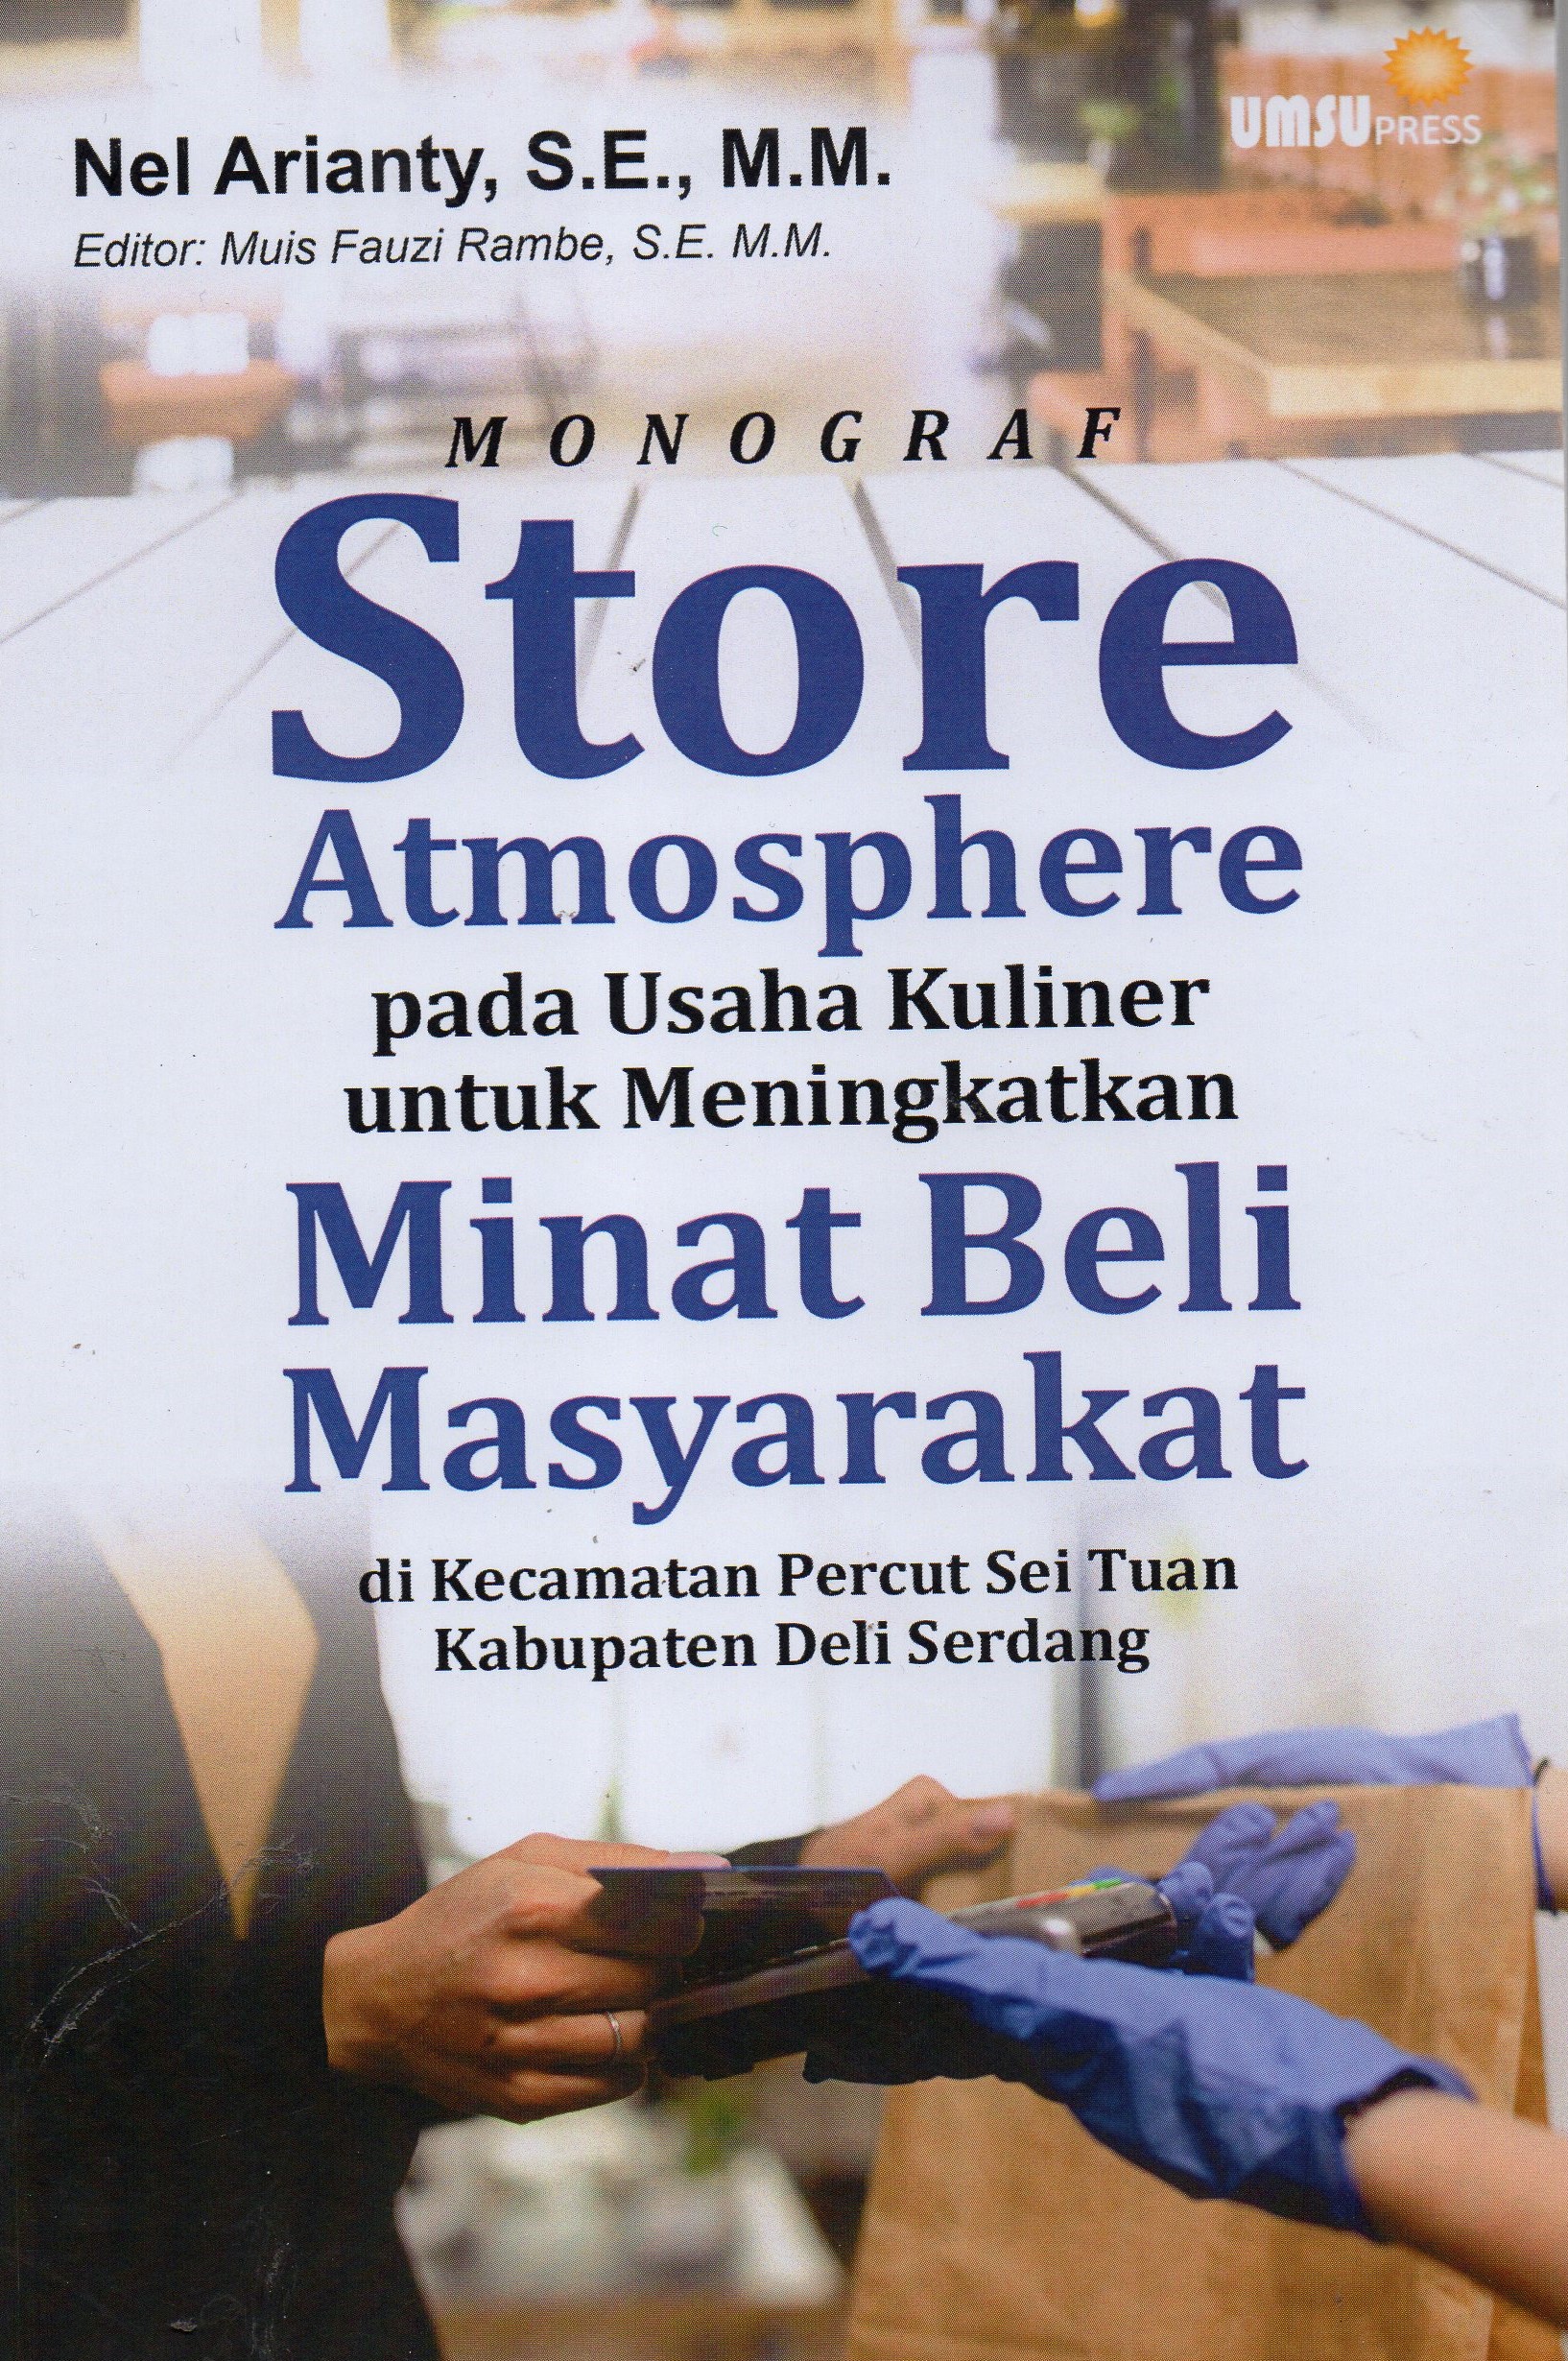 Monograf Store Atmosphere pada Usaha Kuliner untuk Meningkatkan Minat Beli Masyarakat di Kecamatan Percut Sei Tuan Kabupaten Deli Serdang